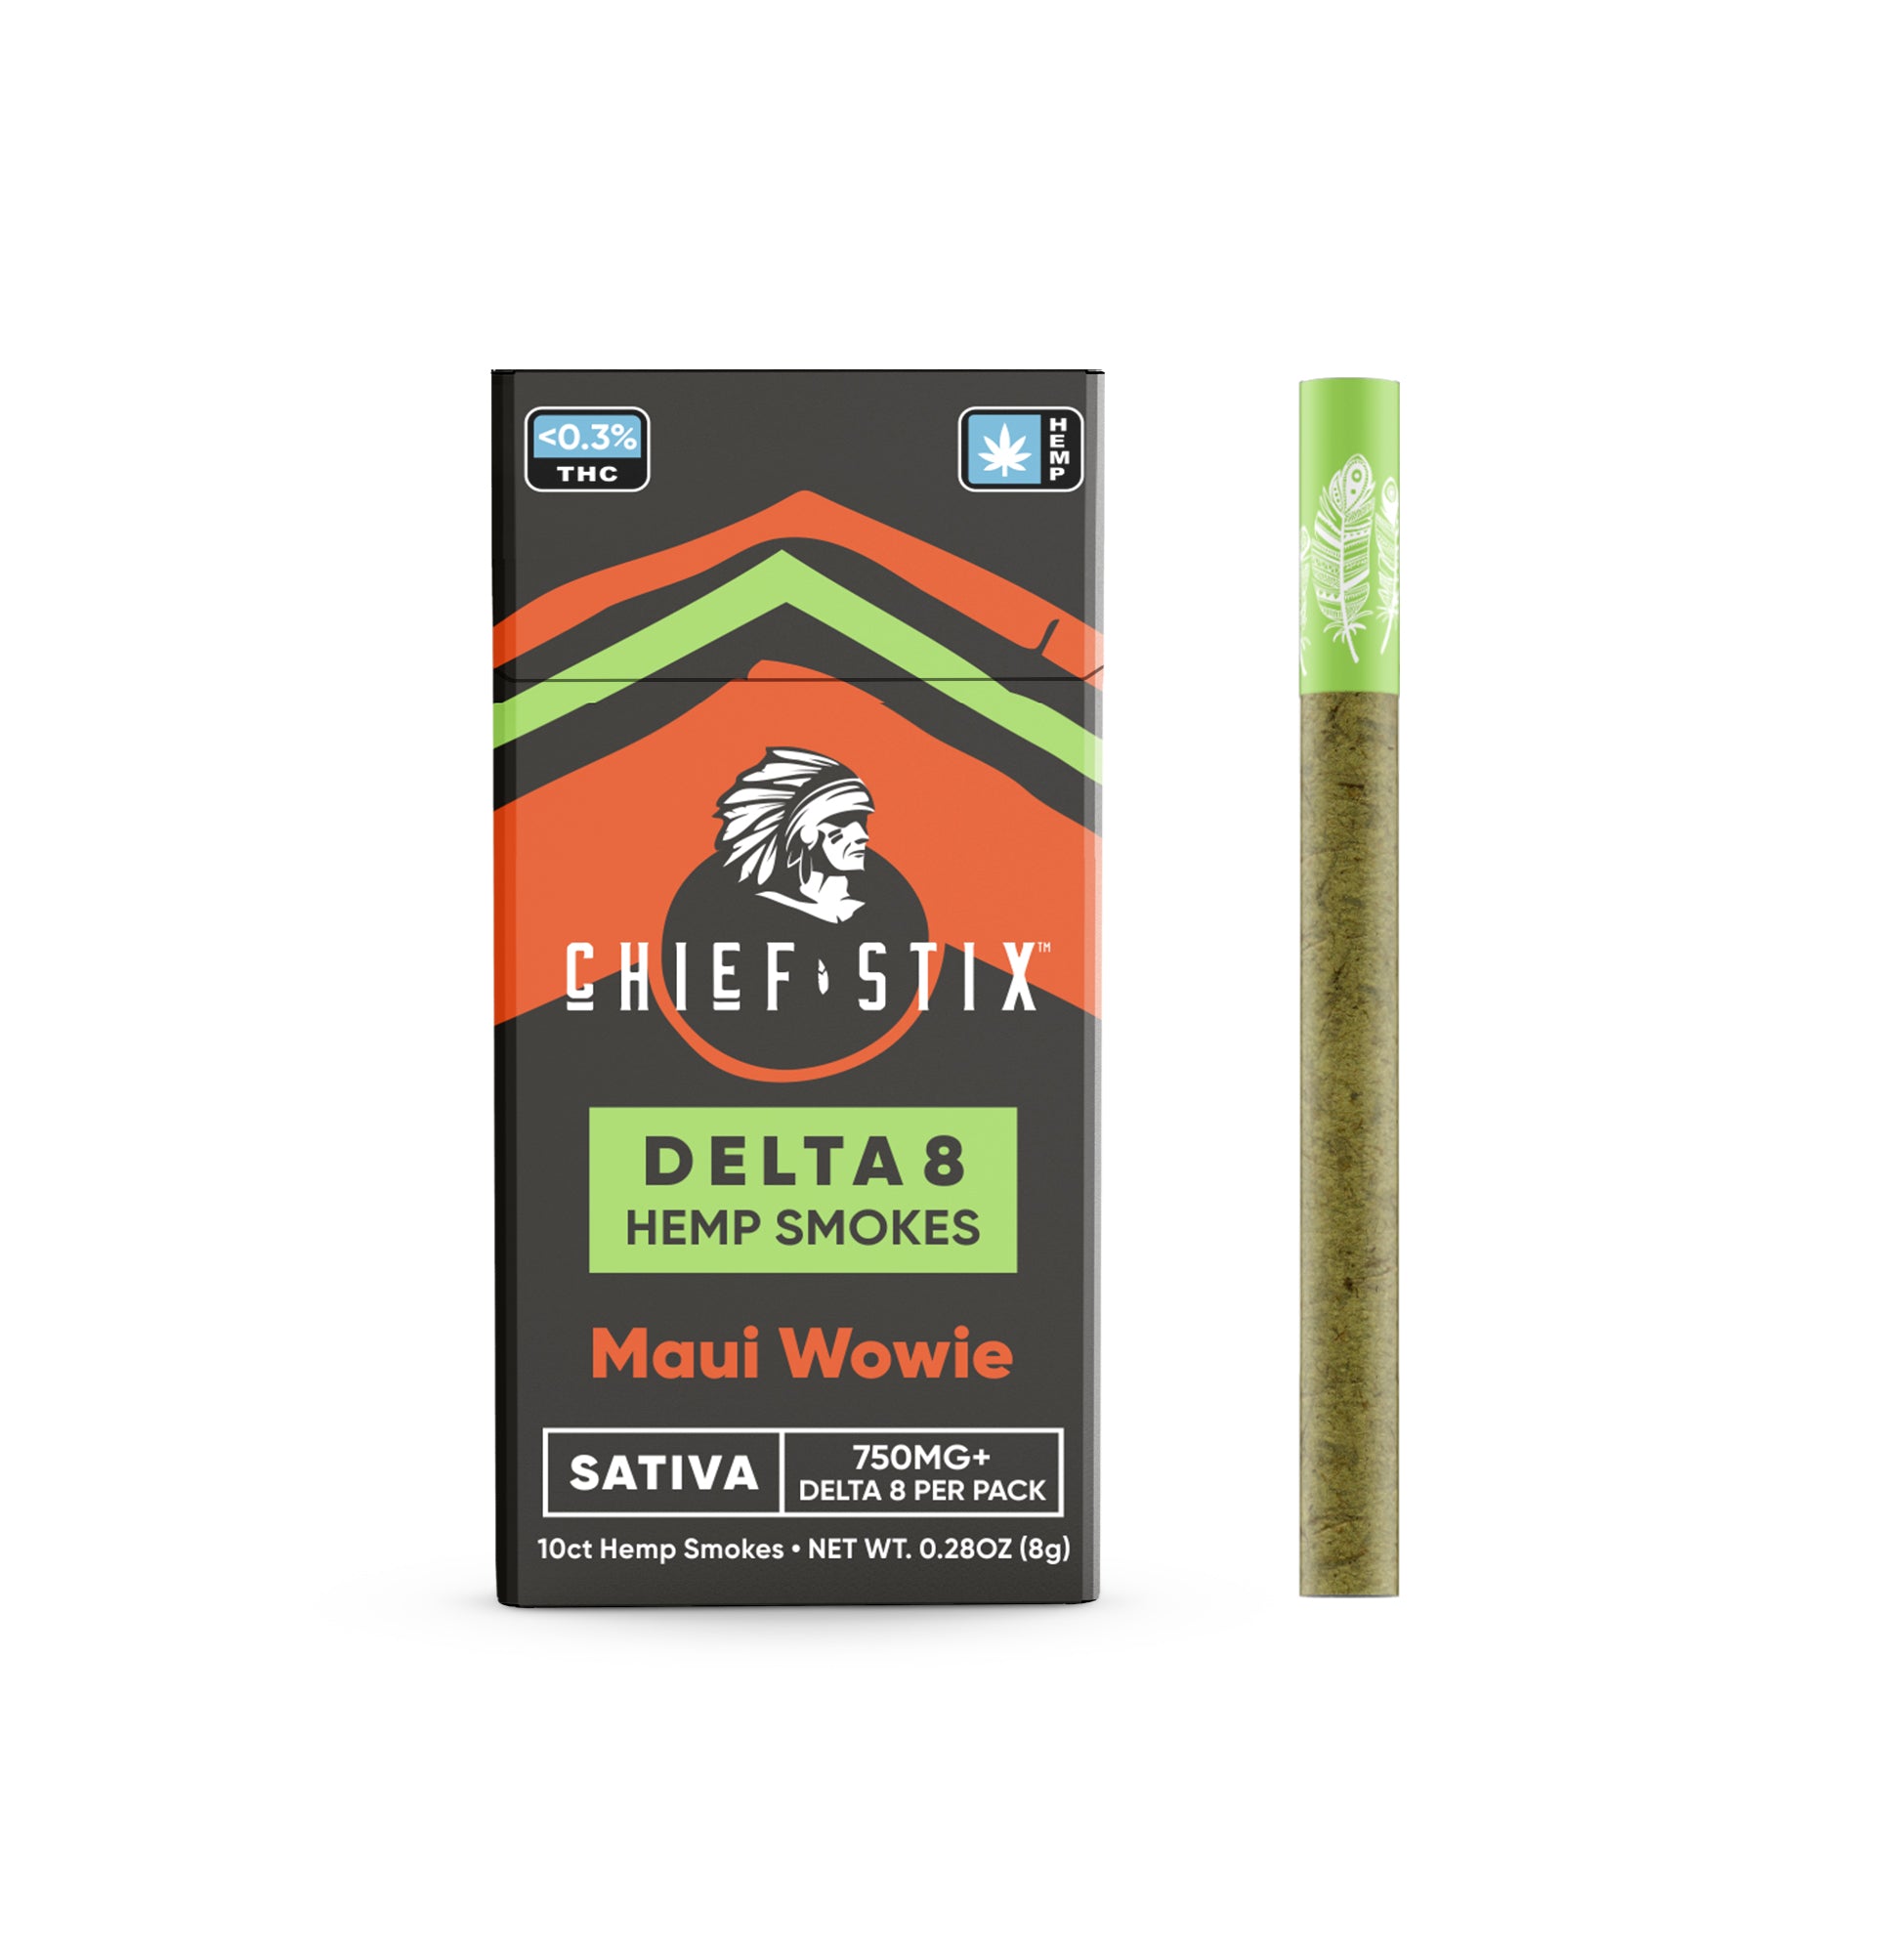 Delta 8 Hemp Smokes - Sativa Maui Wowie 10ct (750mg) - H H HARVEST CO